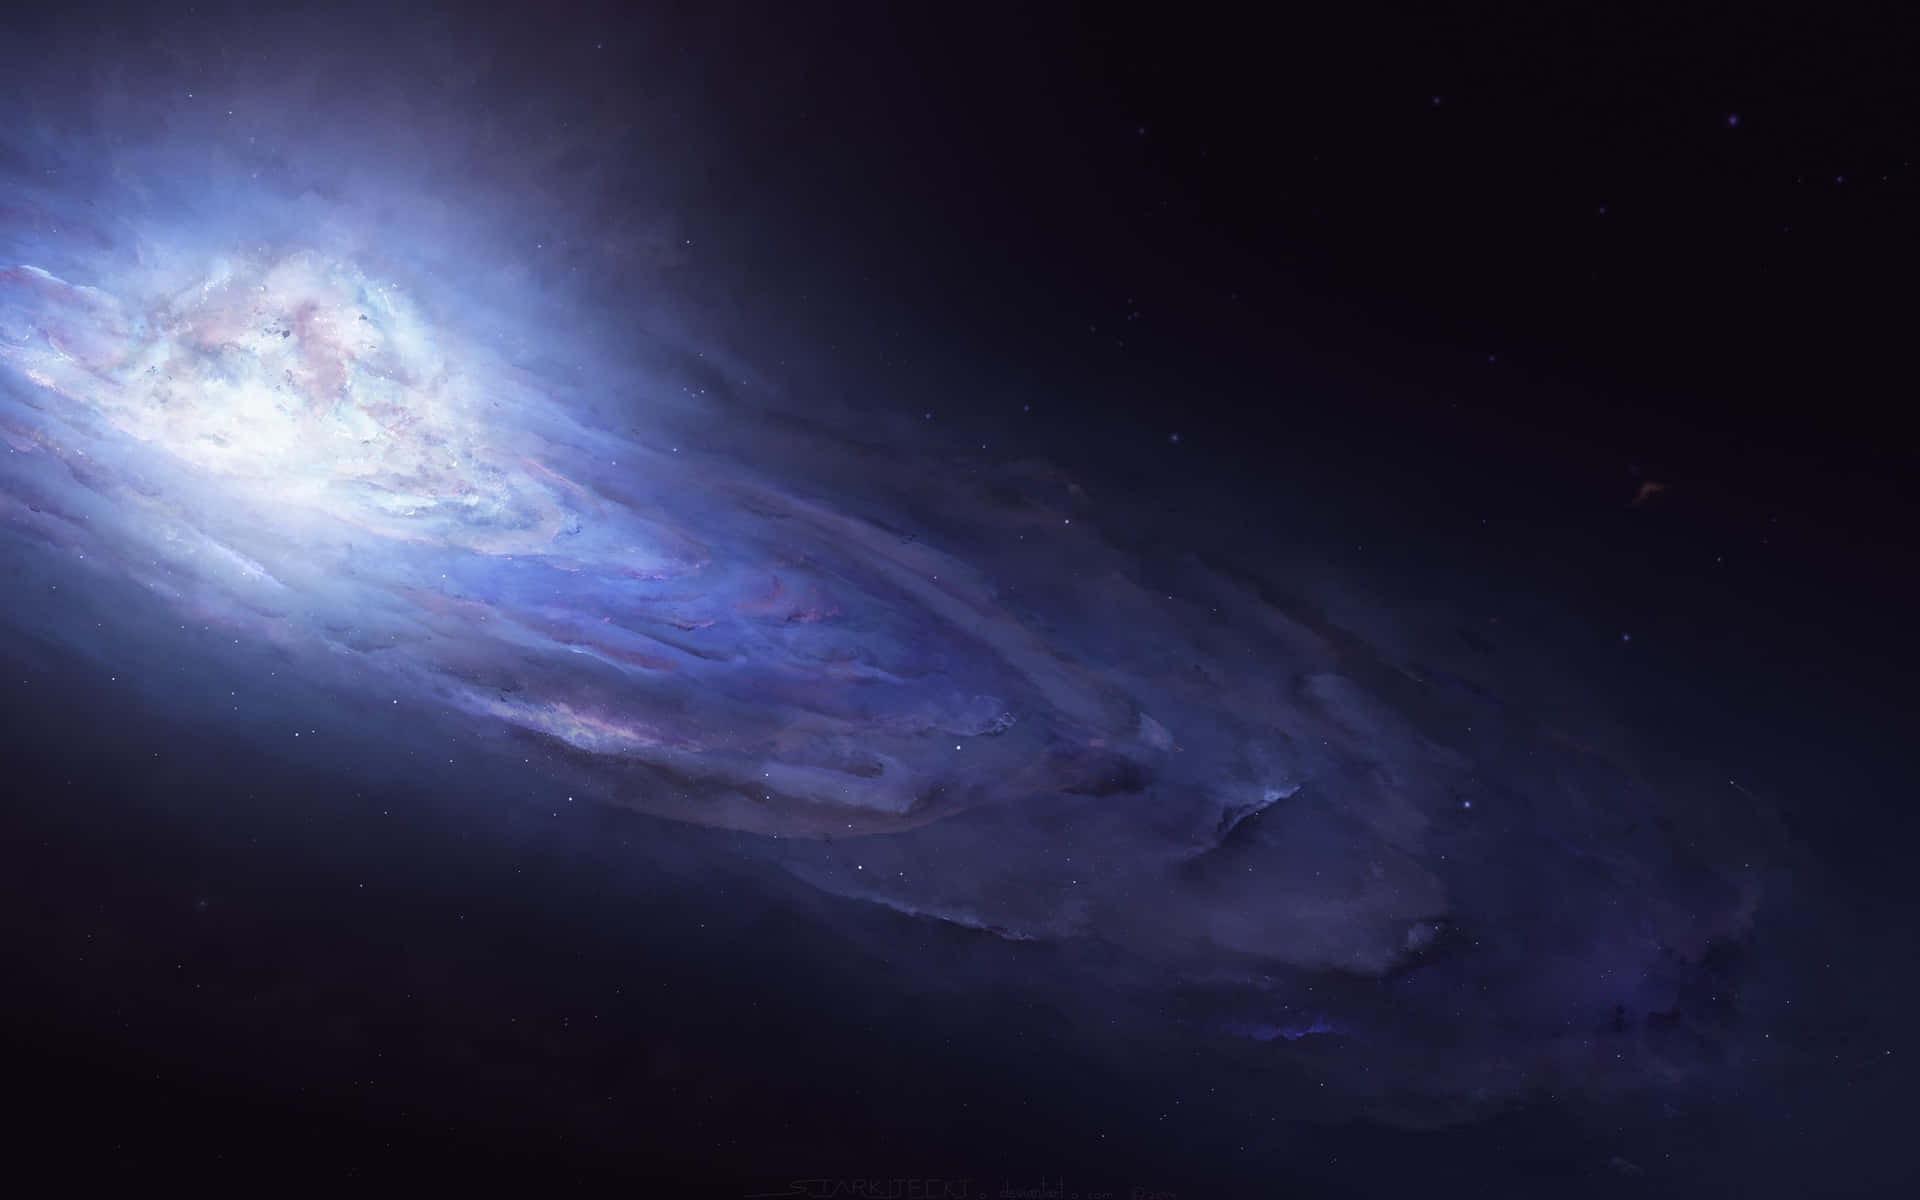 Majestic Whirlpool Galaxy in High Resolution Wallpaper